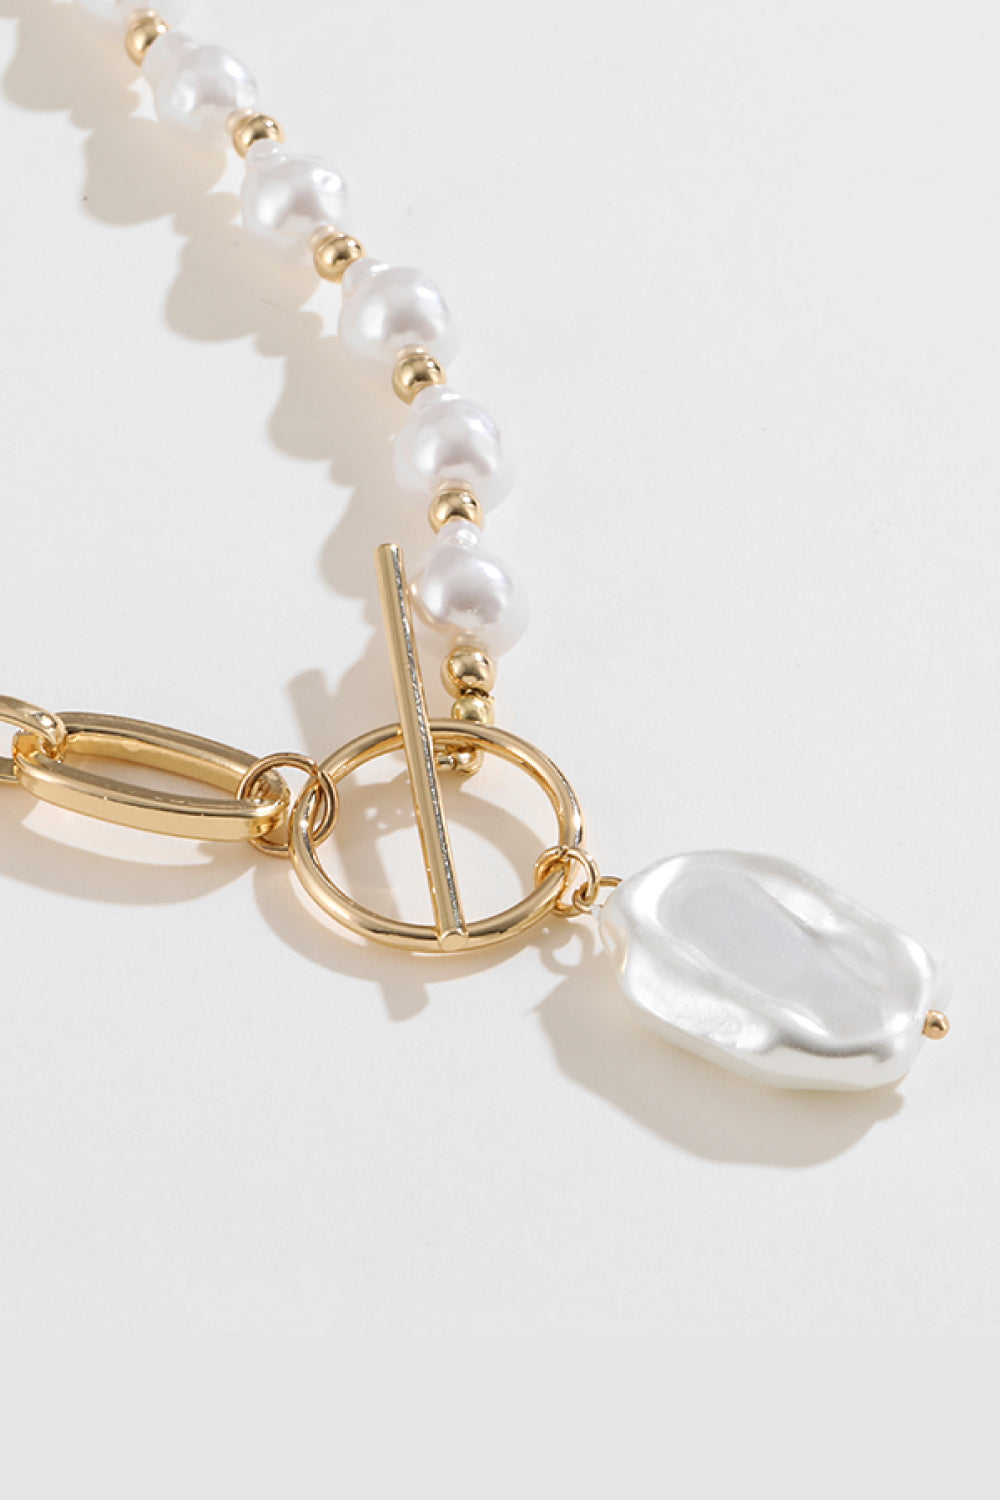 Half Pearl Half Chain Necklace